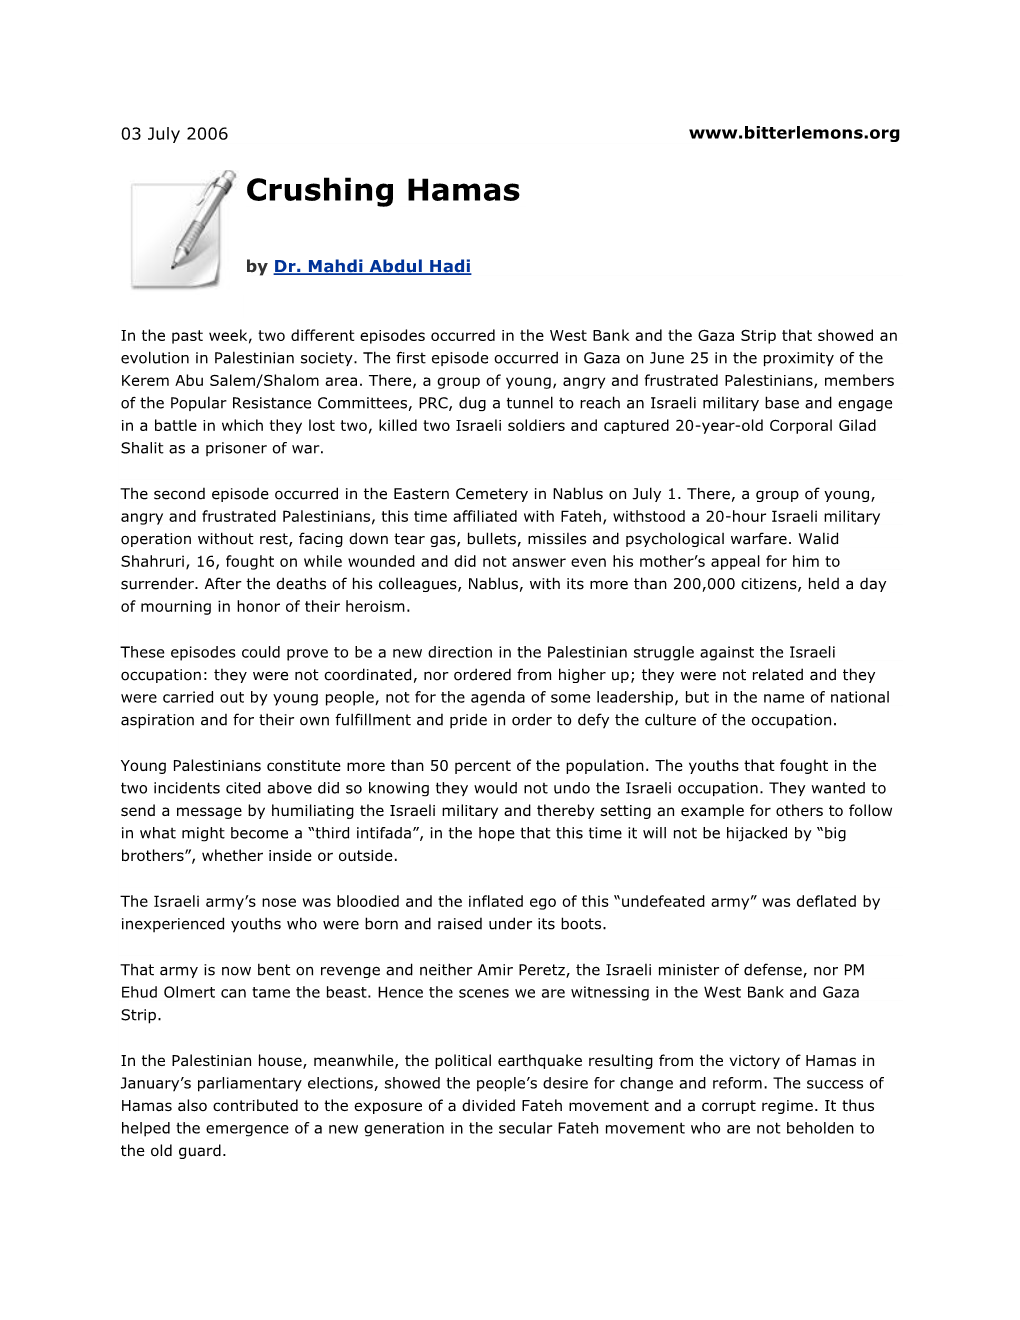 Crushing Hamas